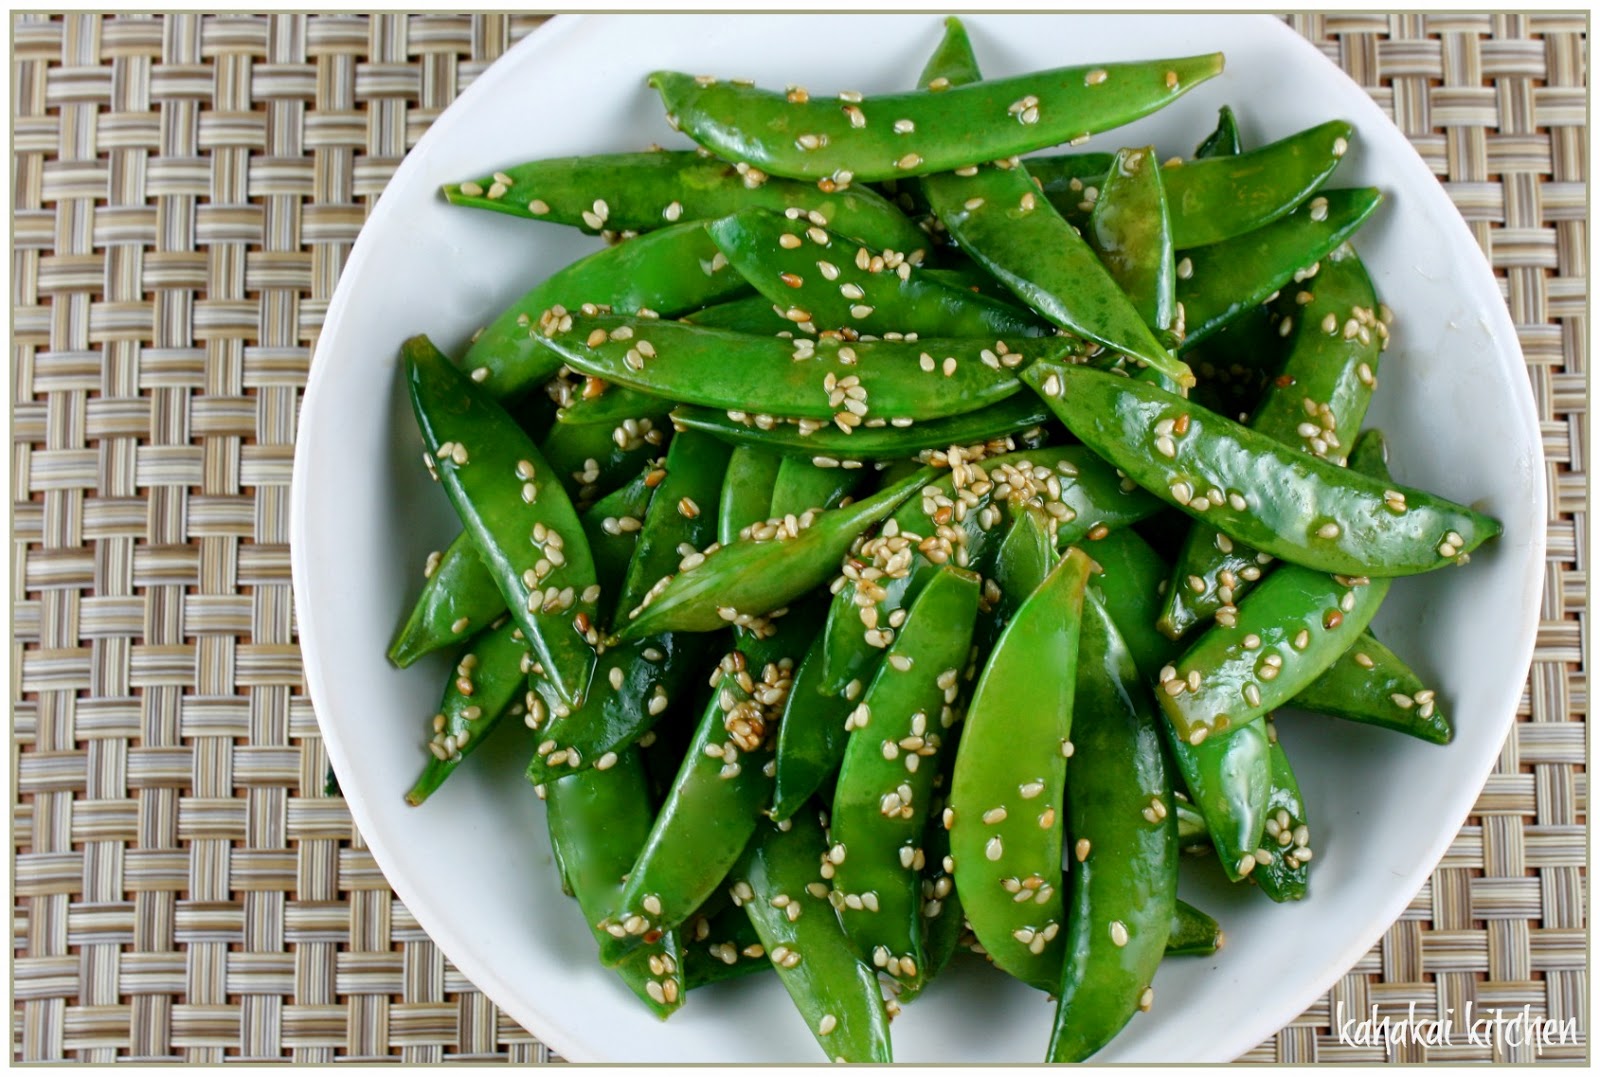 Kahakai Kitchen Sesame Sugar Snap Peas (A Tasty Pupu/Snack and